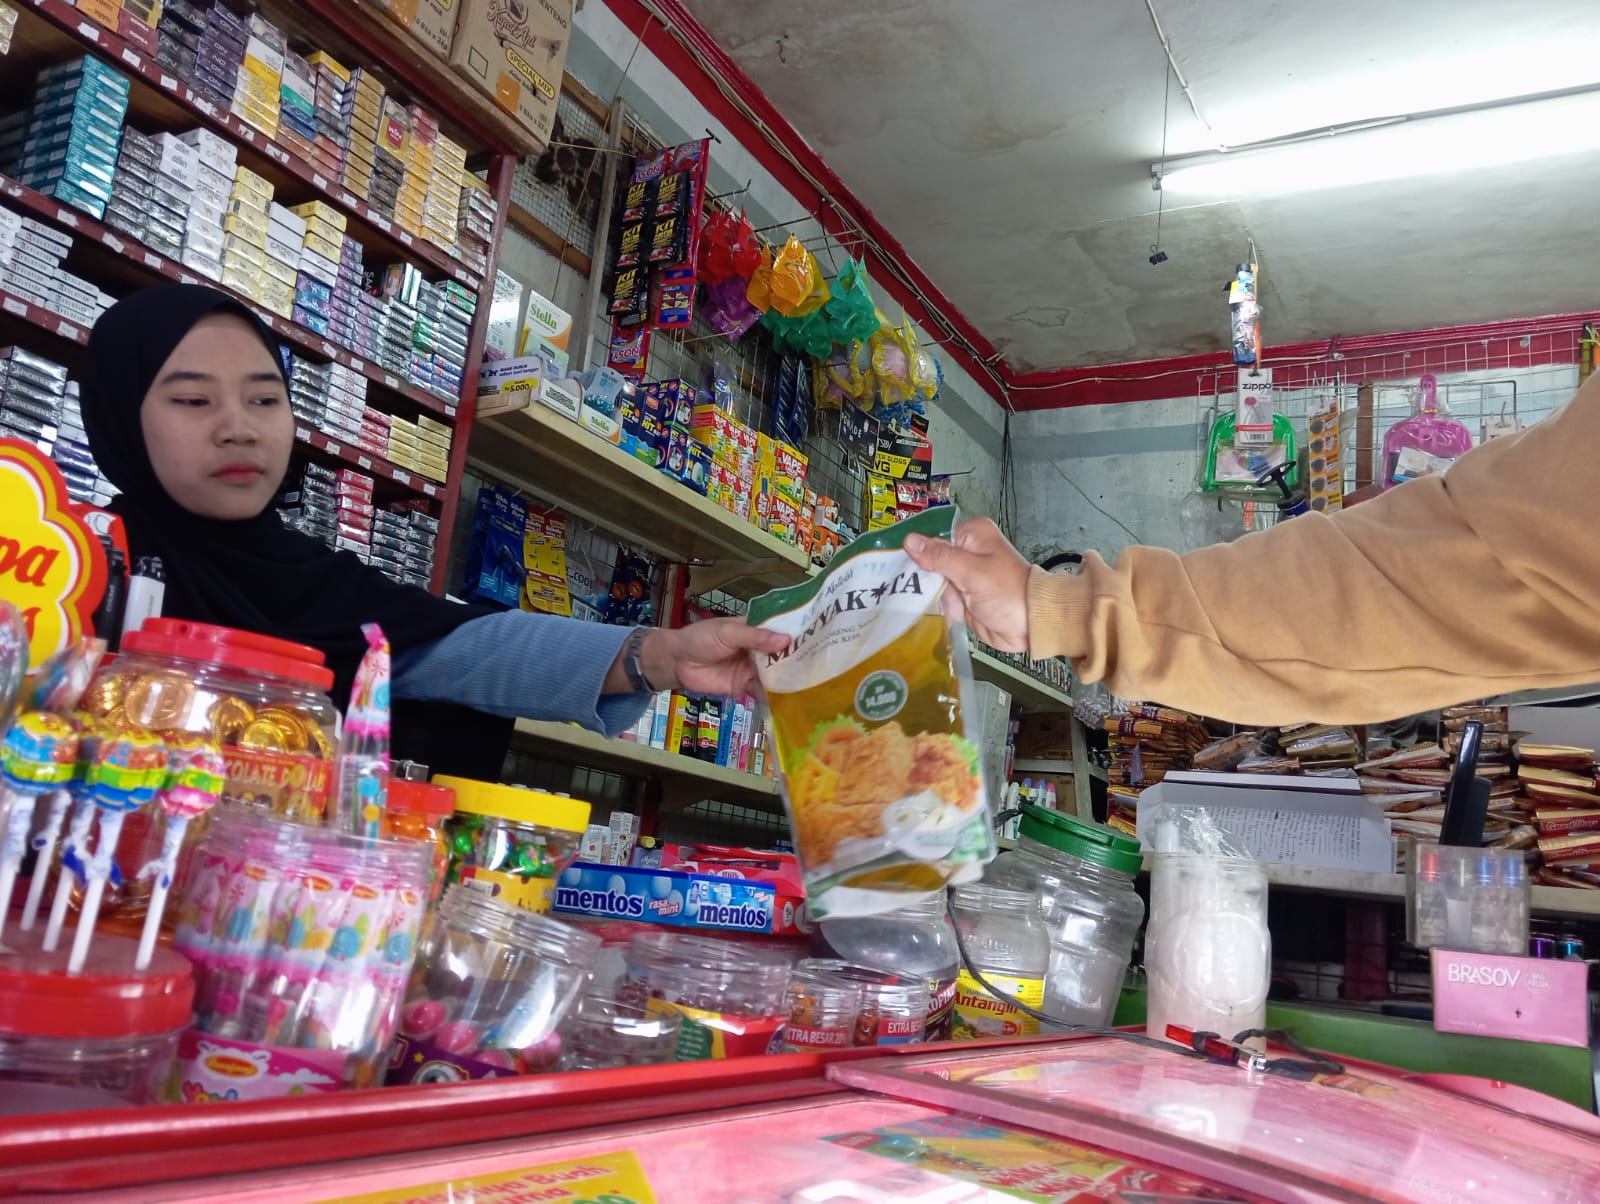 Seorang penjaga toko sedang melayani pembelian minyak goreng bersubsidi Minyak Kita, di Margahayu, Kota Bandung. (Nizar/Jabar Ekspres)